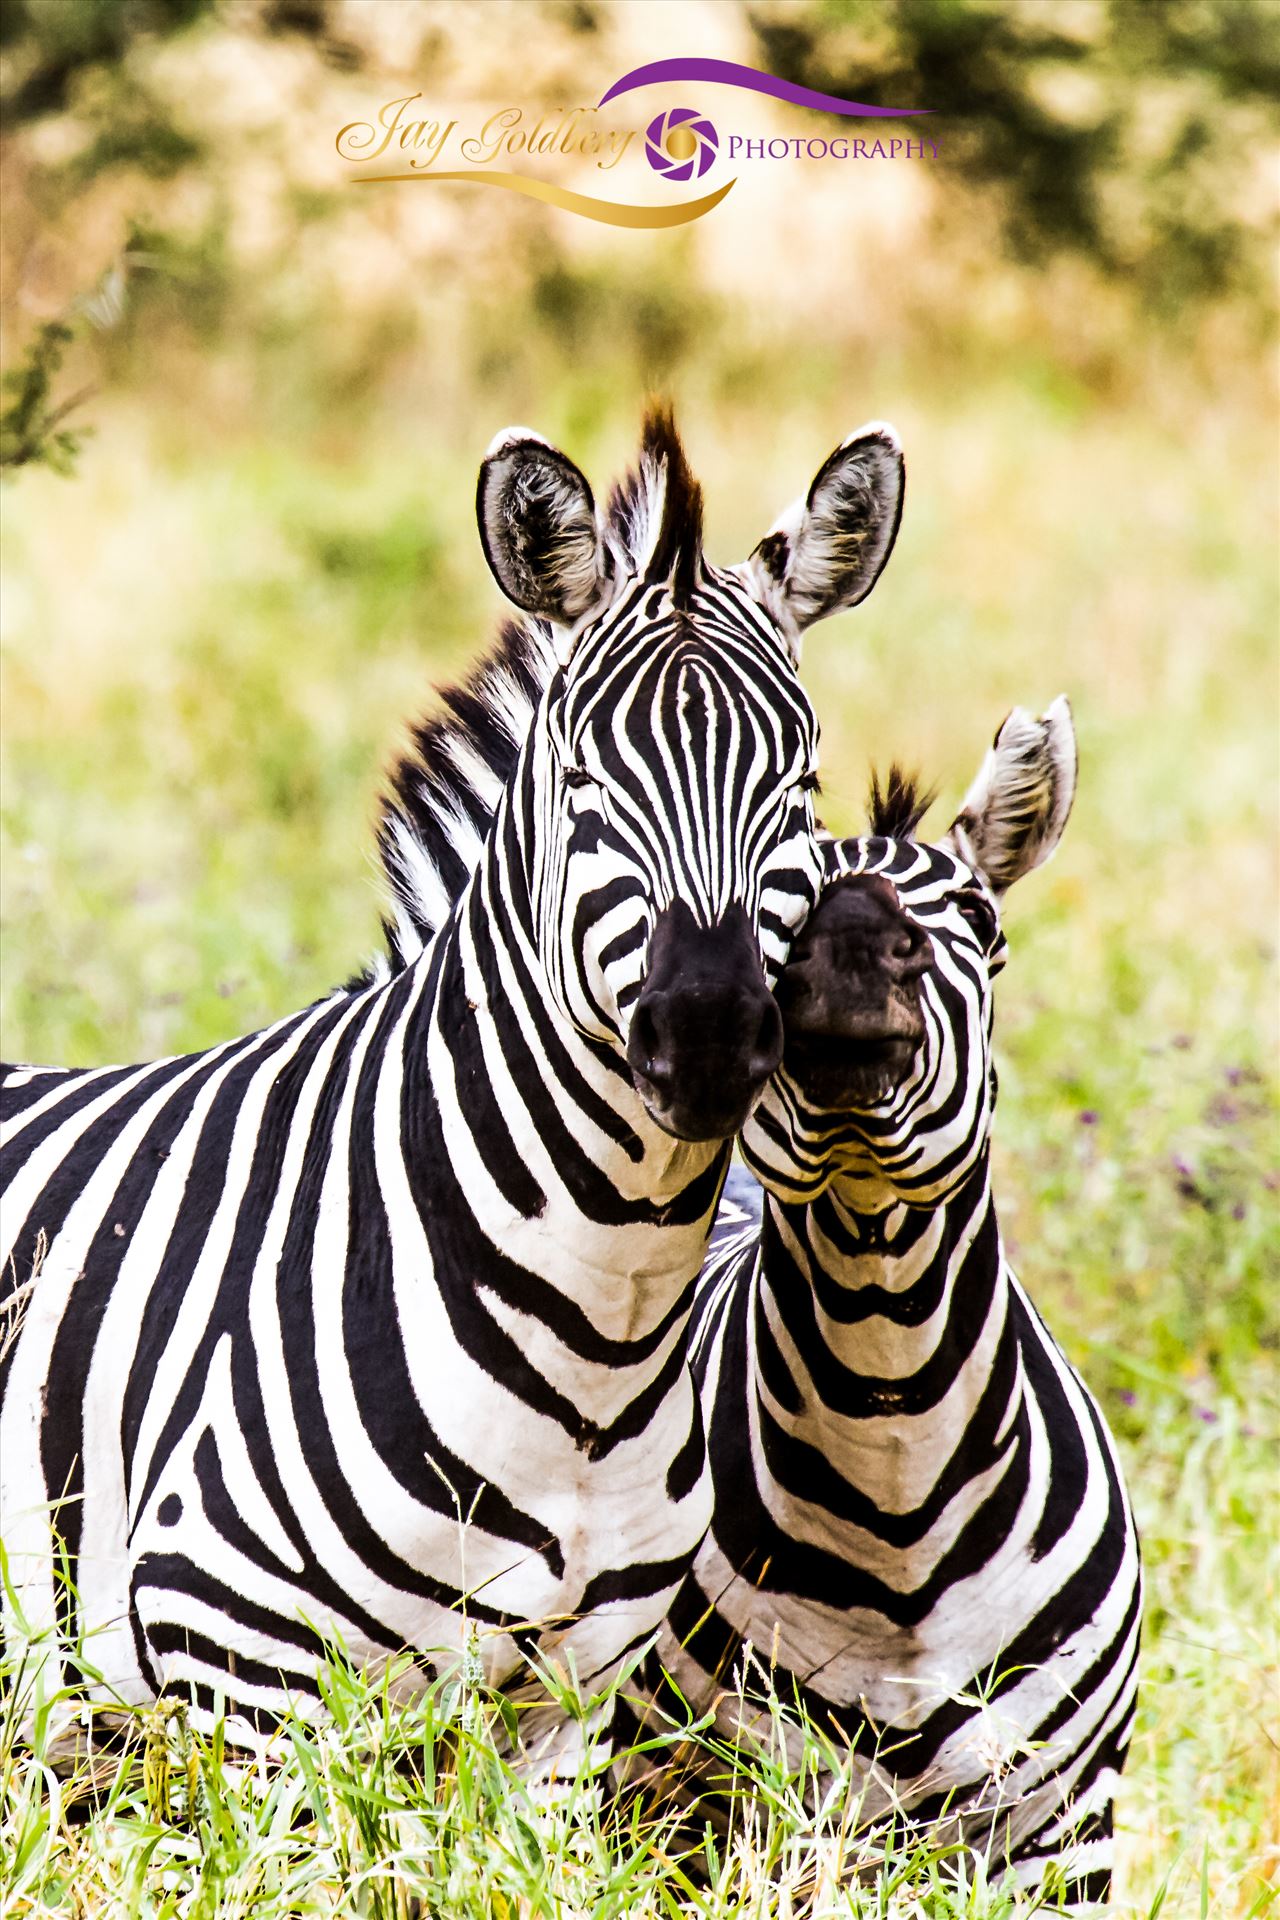 Baby Zebra and Mom-1.jpg  by Jay Goldberg Photography